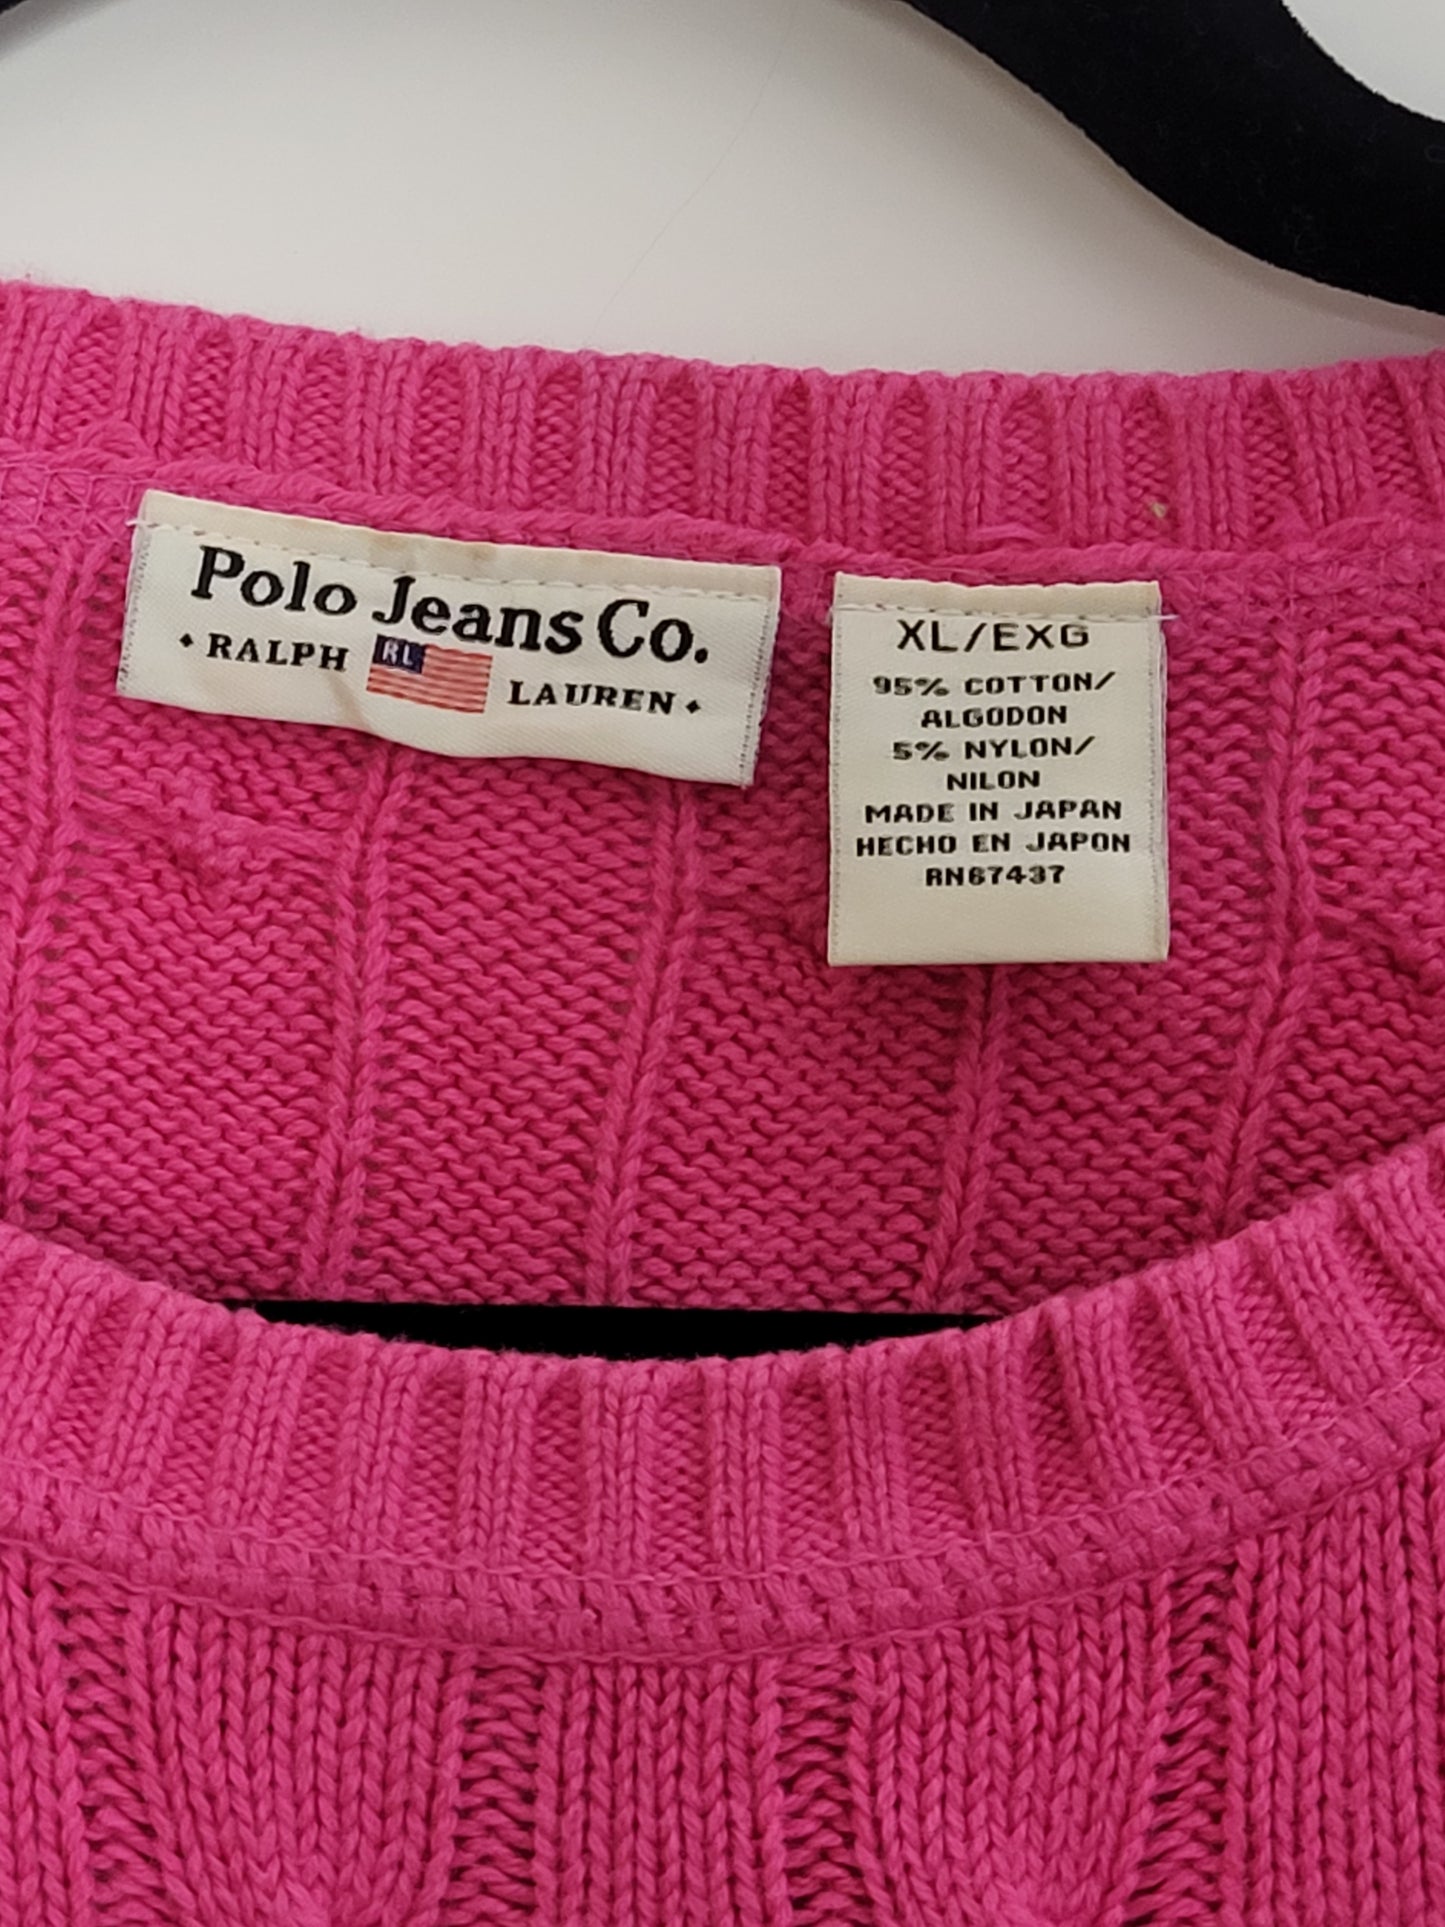 Ralph Lauren Polo Jeans - Pulli - Zopfmuster - Rosa - Damen - M/L